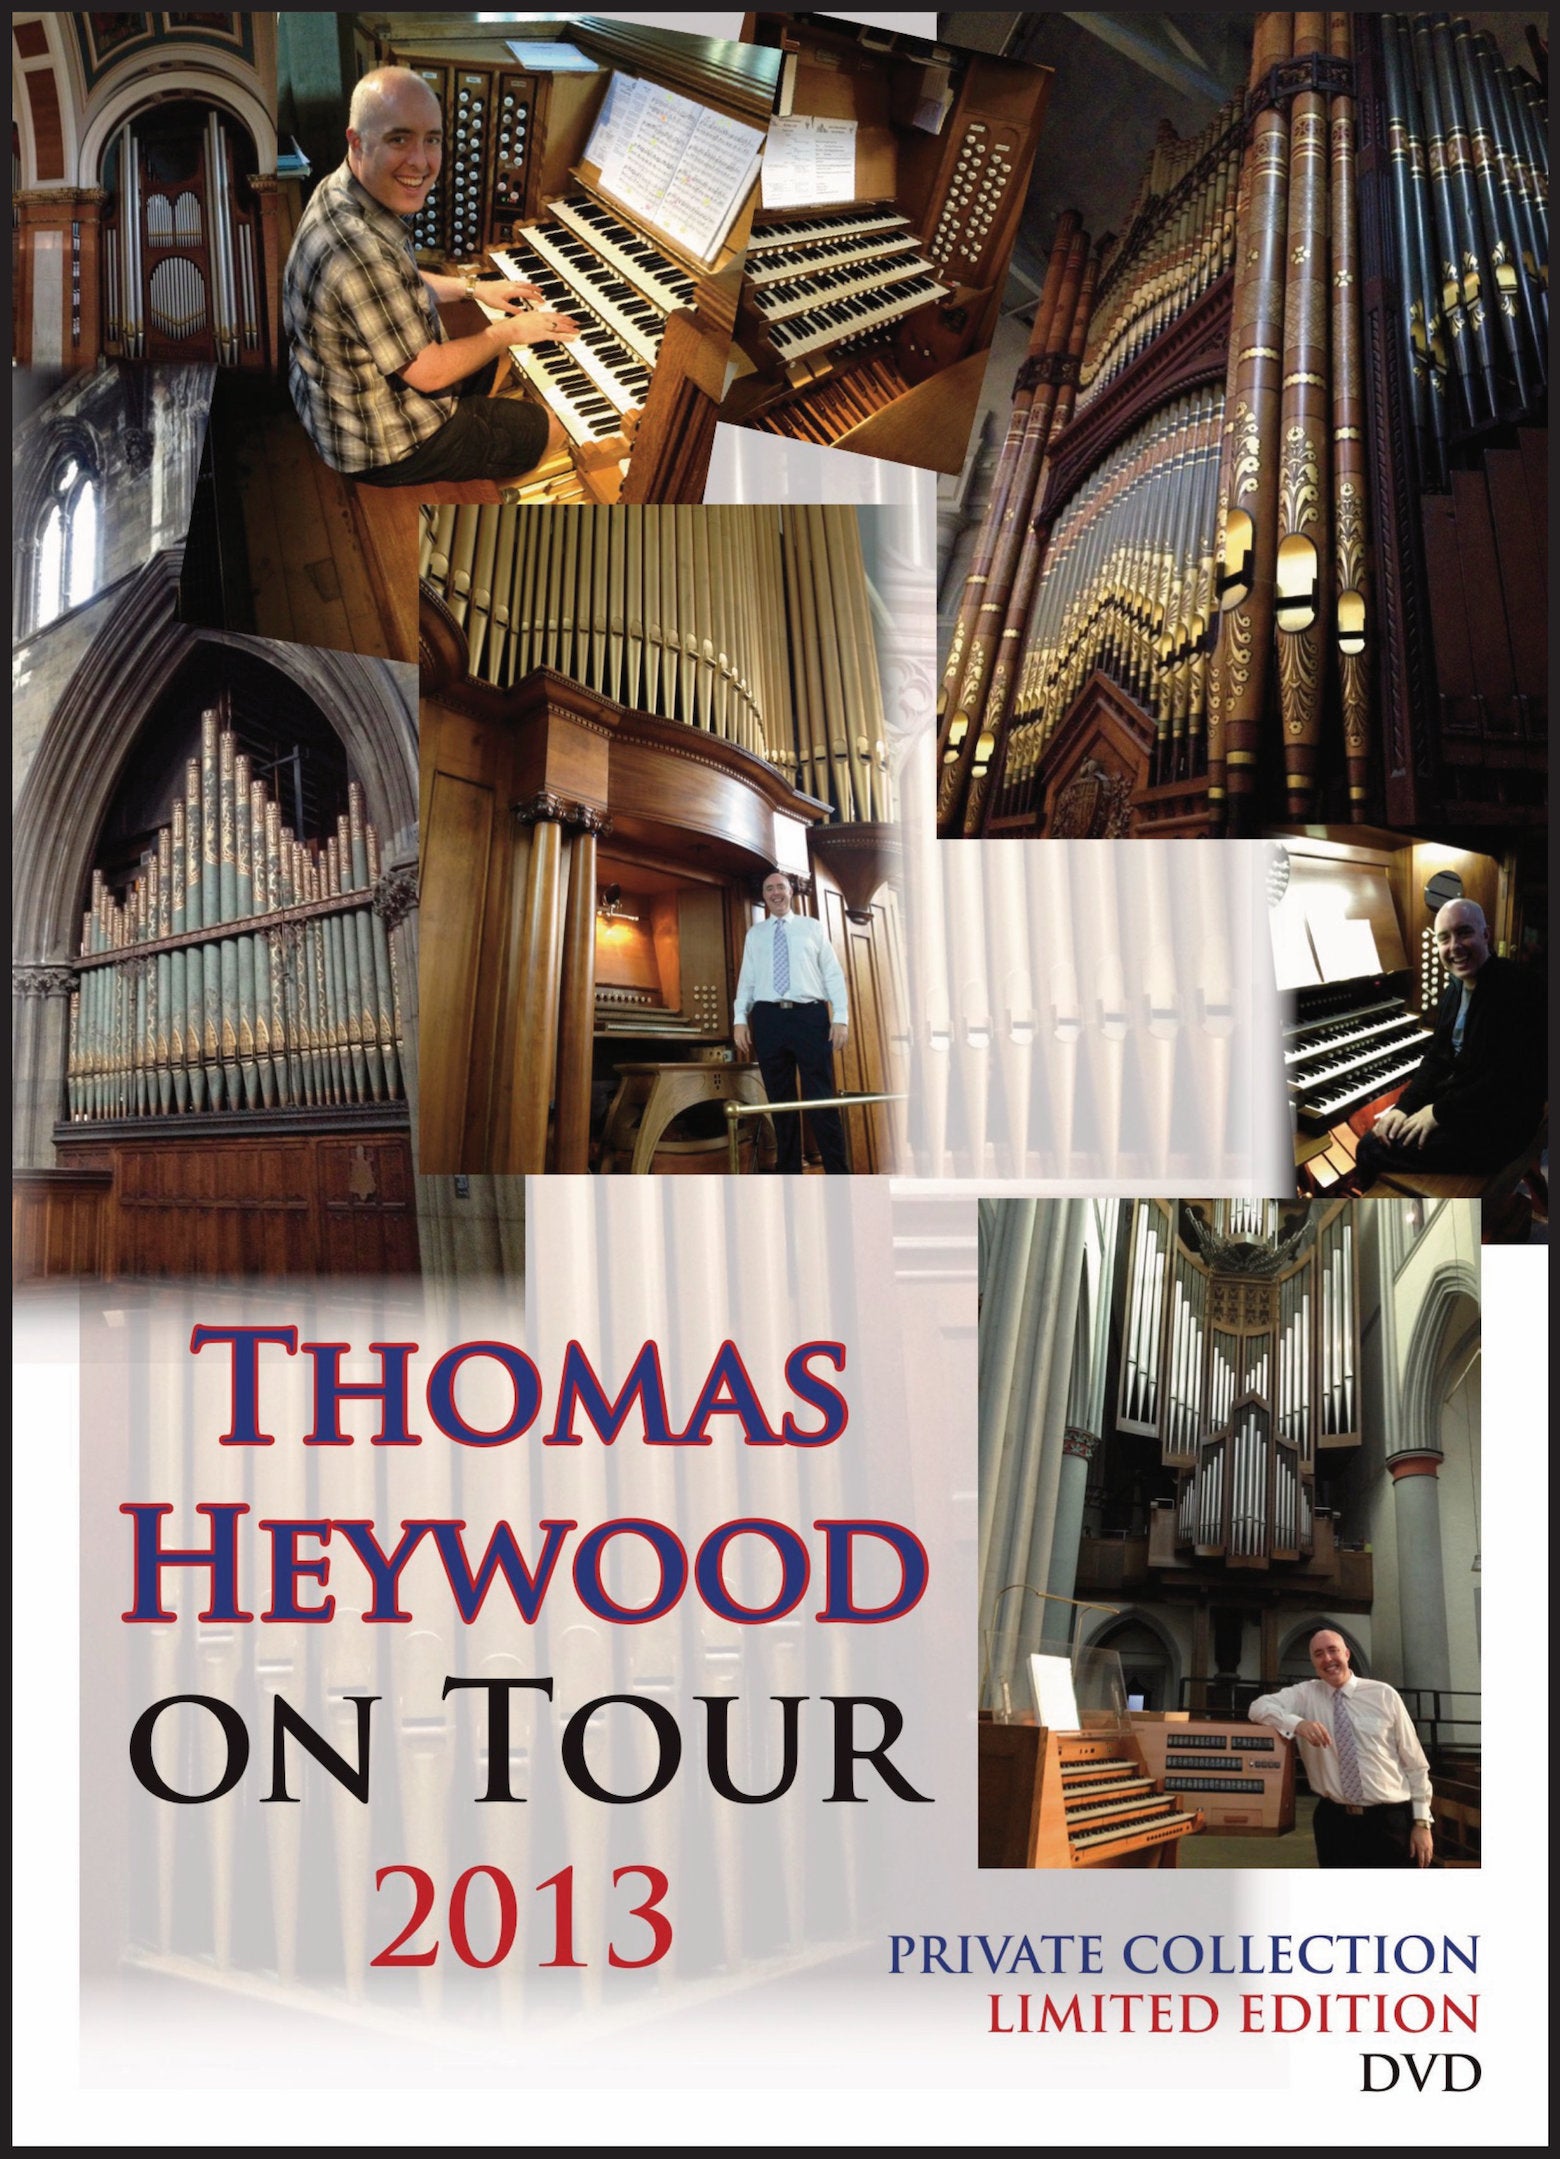 Thomas Heywood on Tour • 2013 (DVD) | Thomas Heywood | Concert Organ International